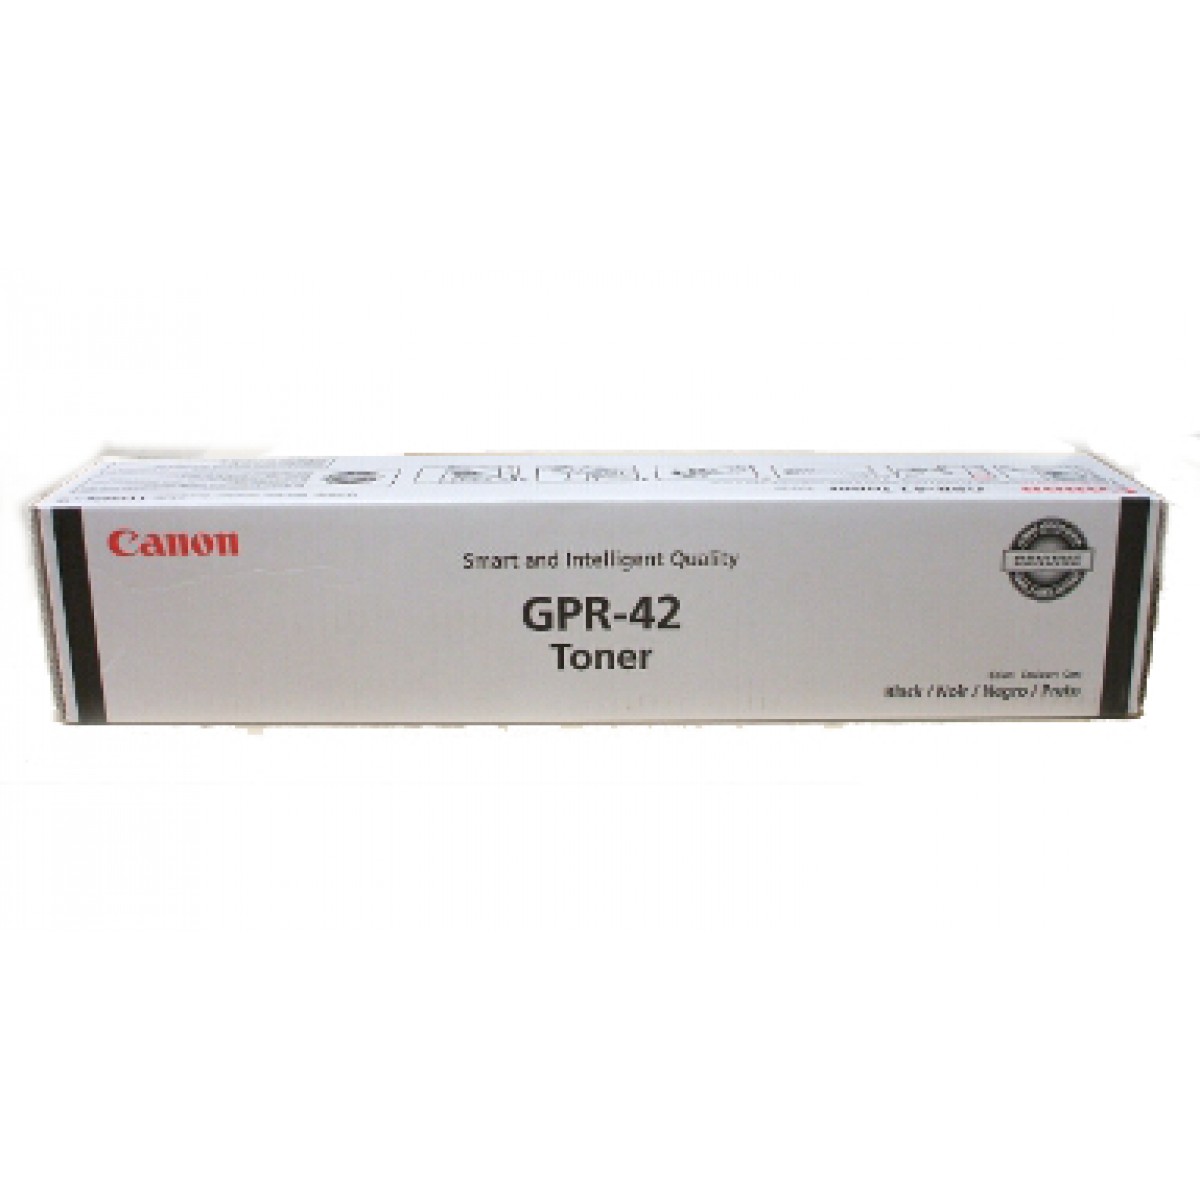 34.000 Pages Canon Part# 4791B003 Toner Cartridge OEM GPR-42